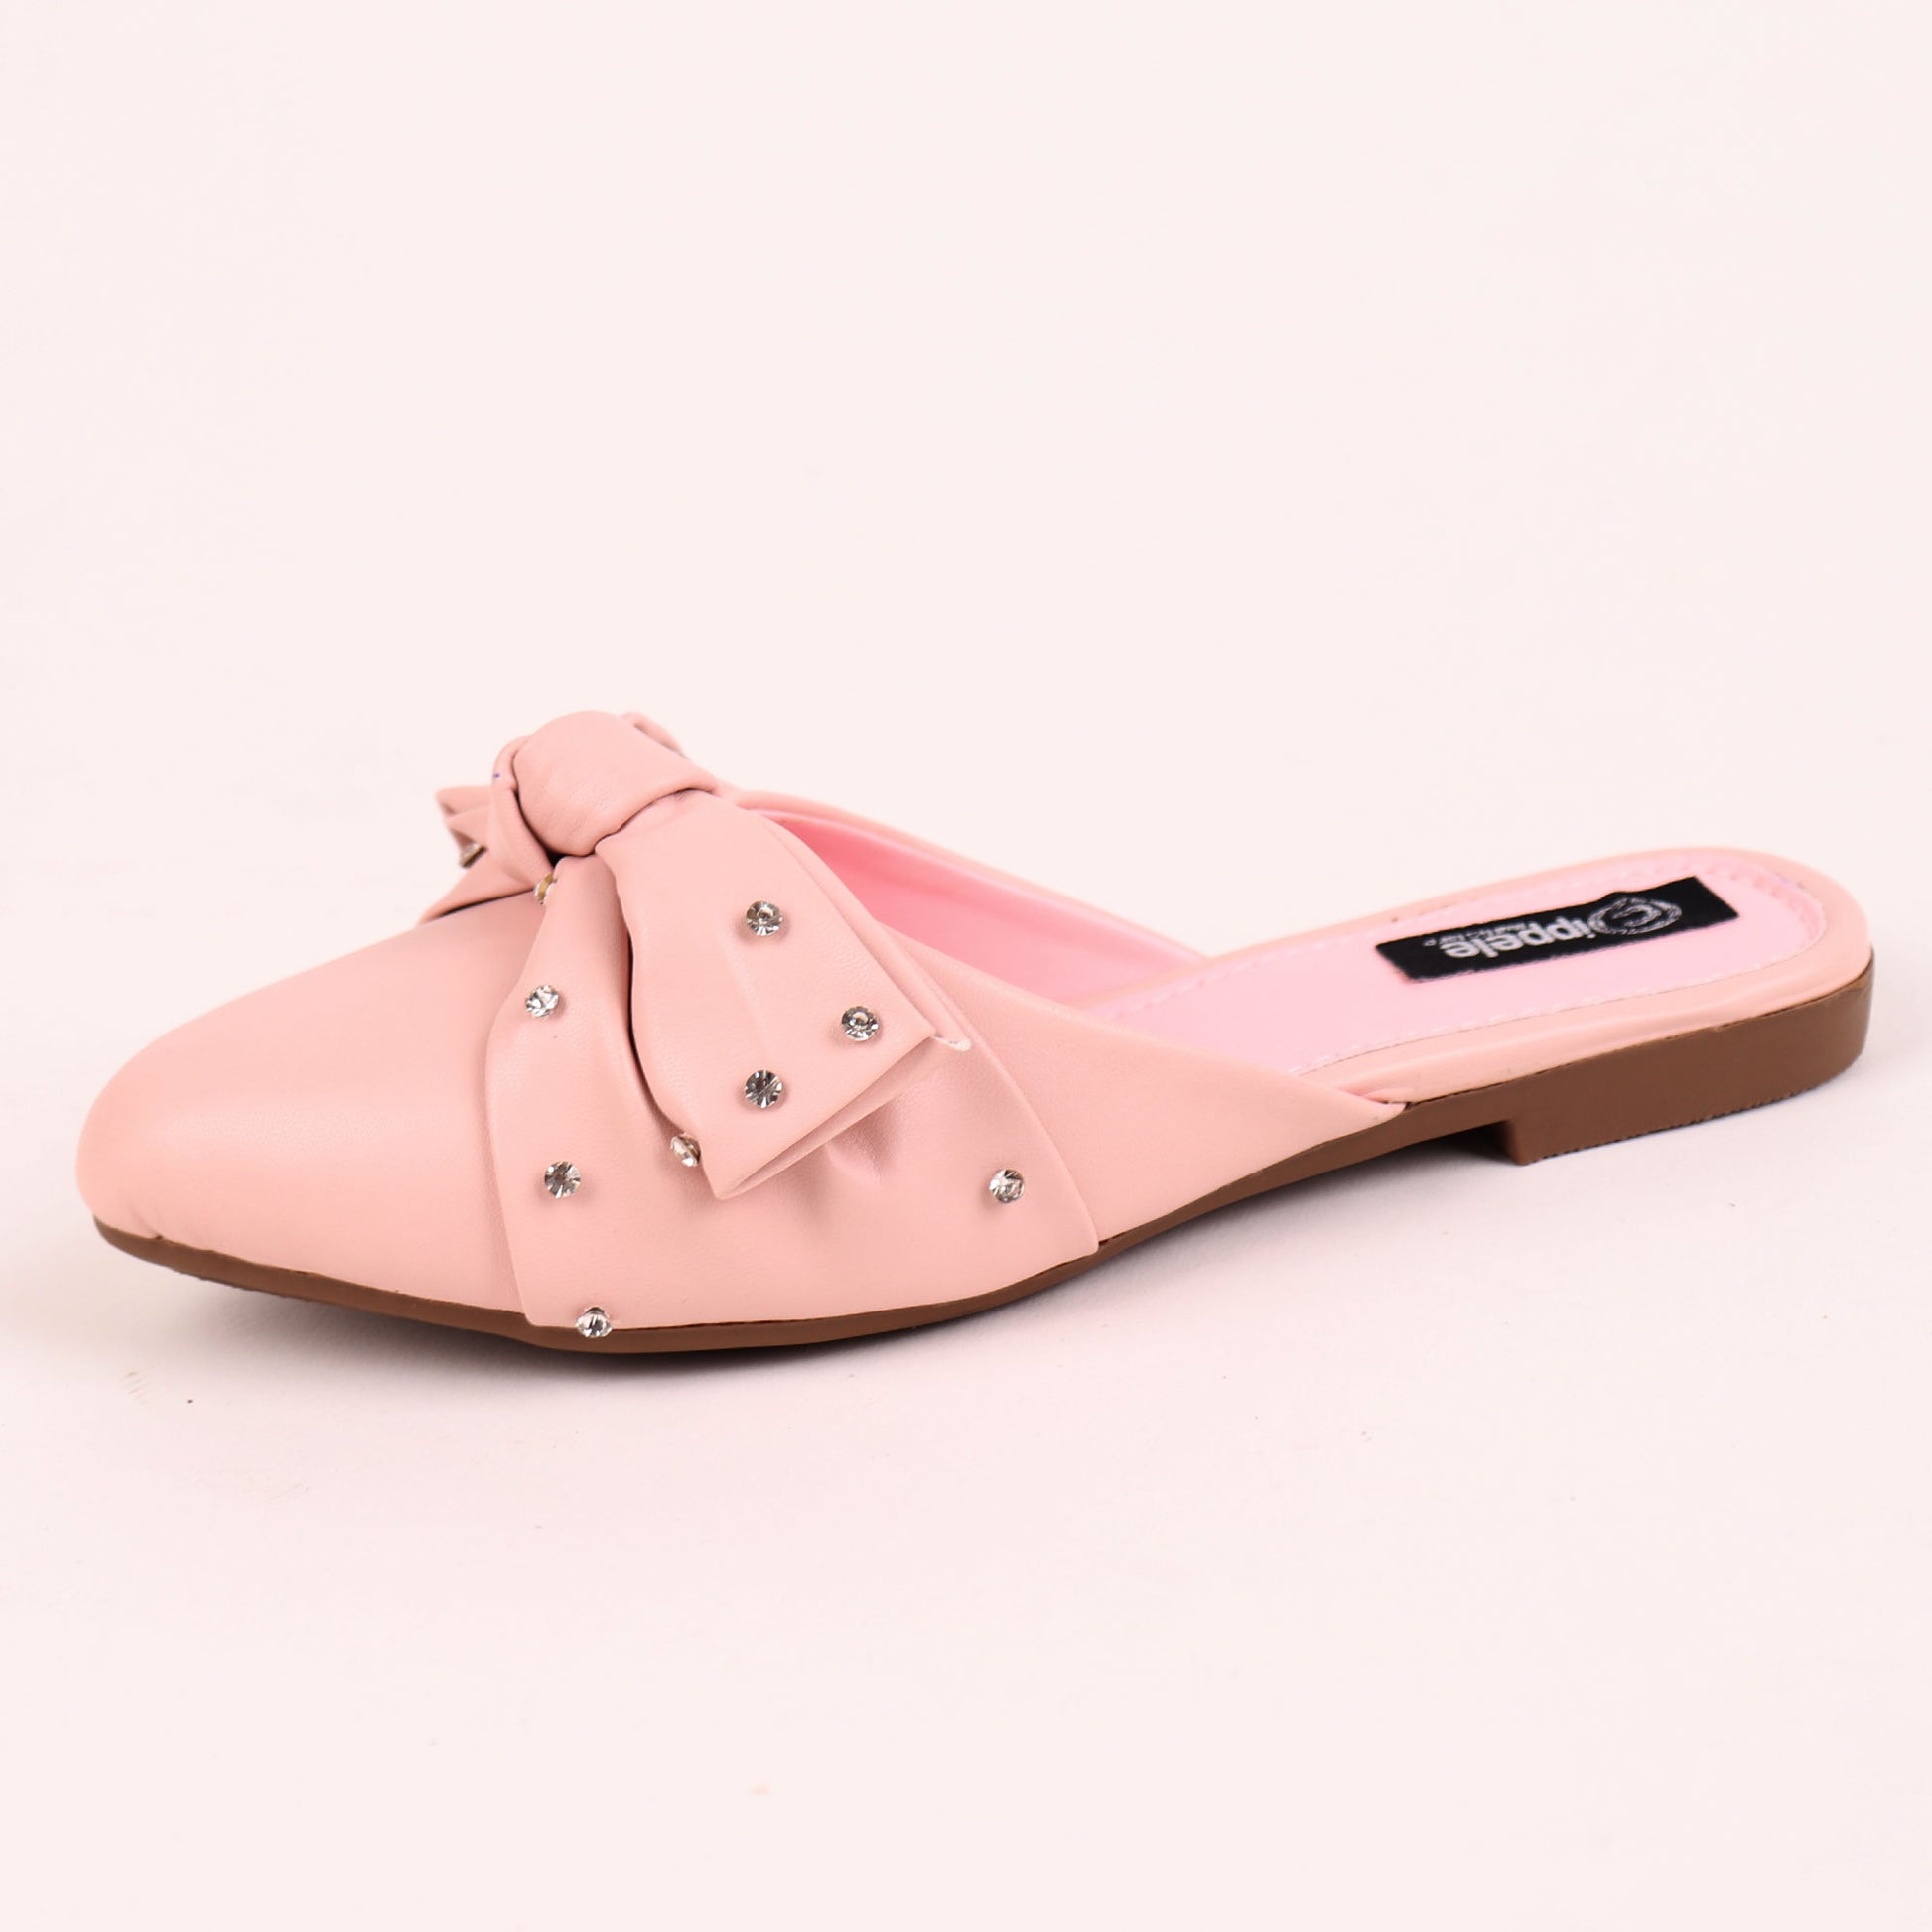 Foot Wear,The Kitten Bow Flats in Pink - Cippele Multi Store